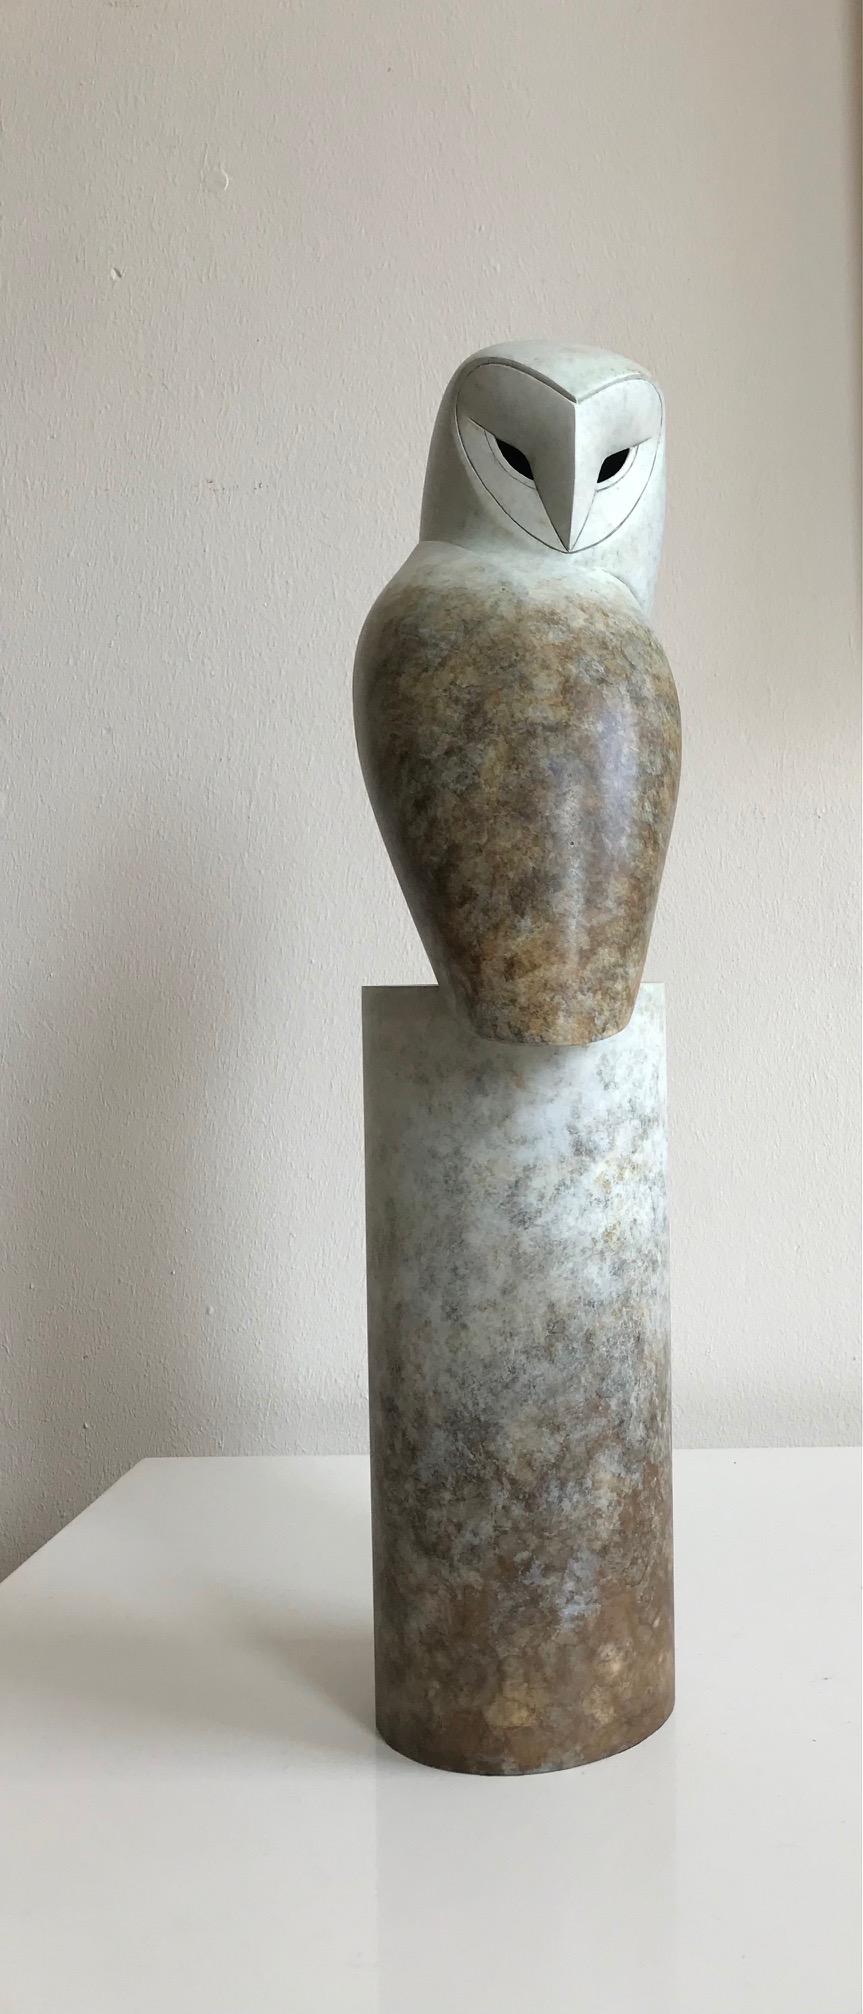 Anthony Theakston Figurative Sculpture - ''Turnaround" Contemporary Bronze Sculpture Portrait of an Owl, Barn Owl